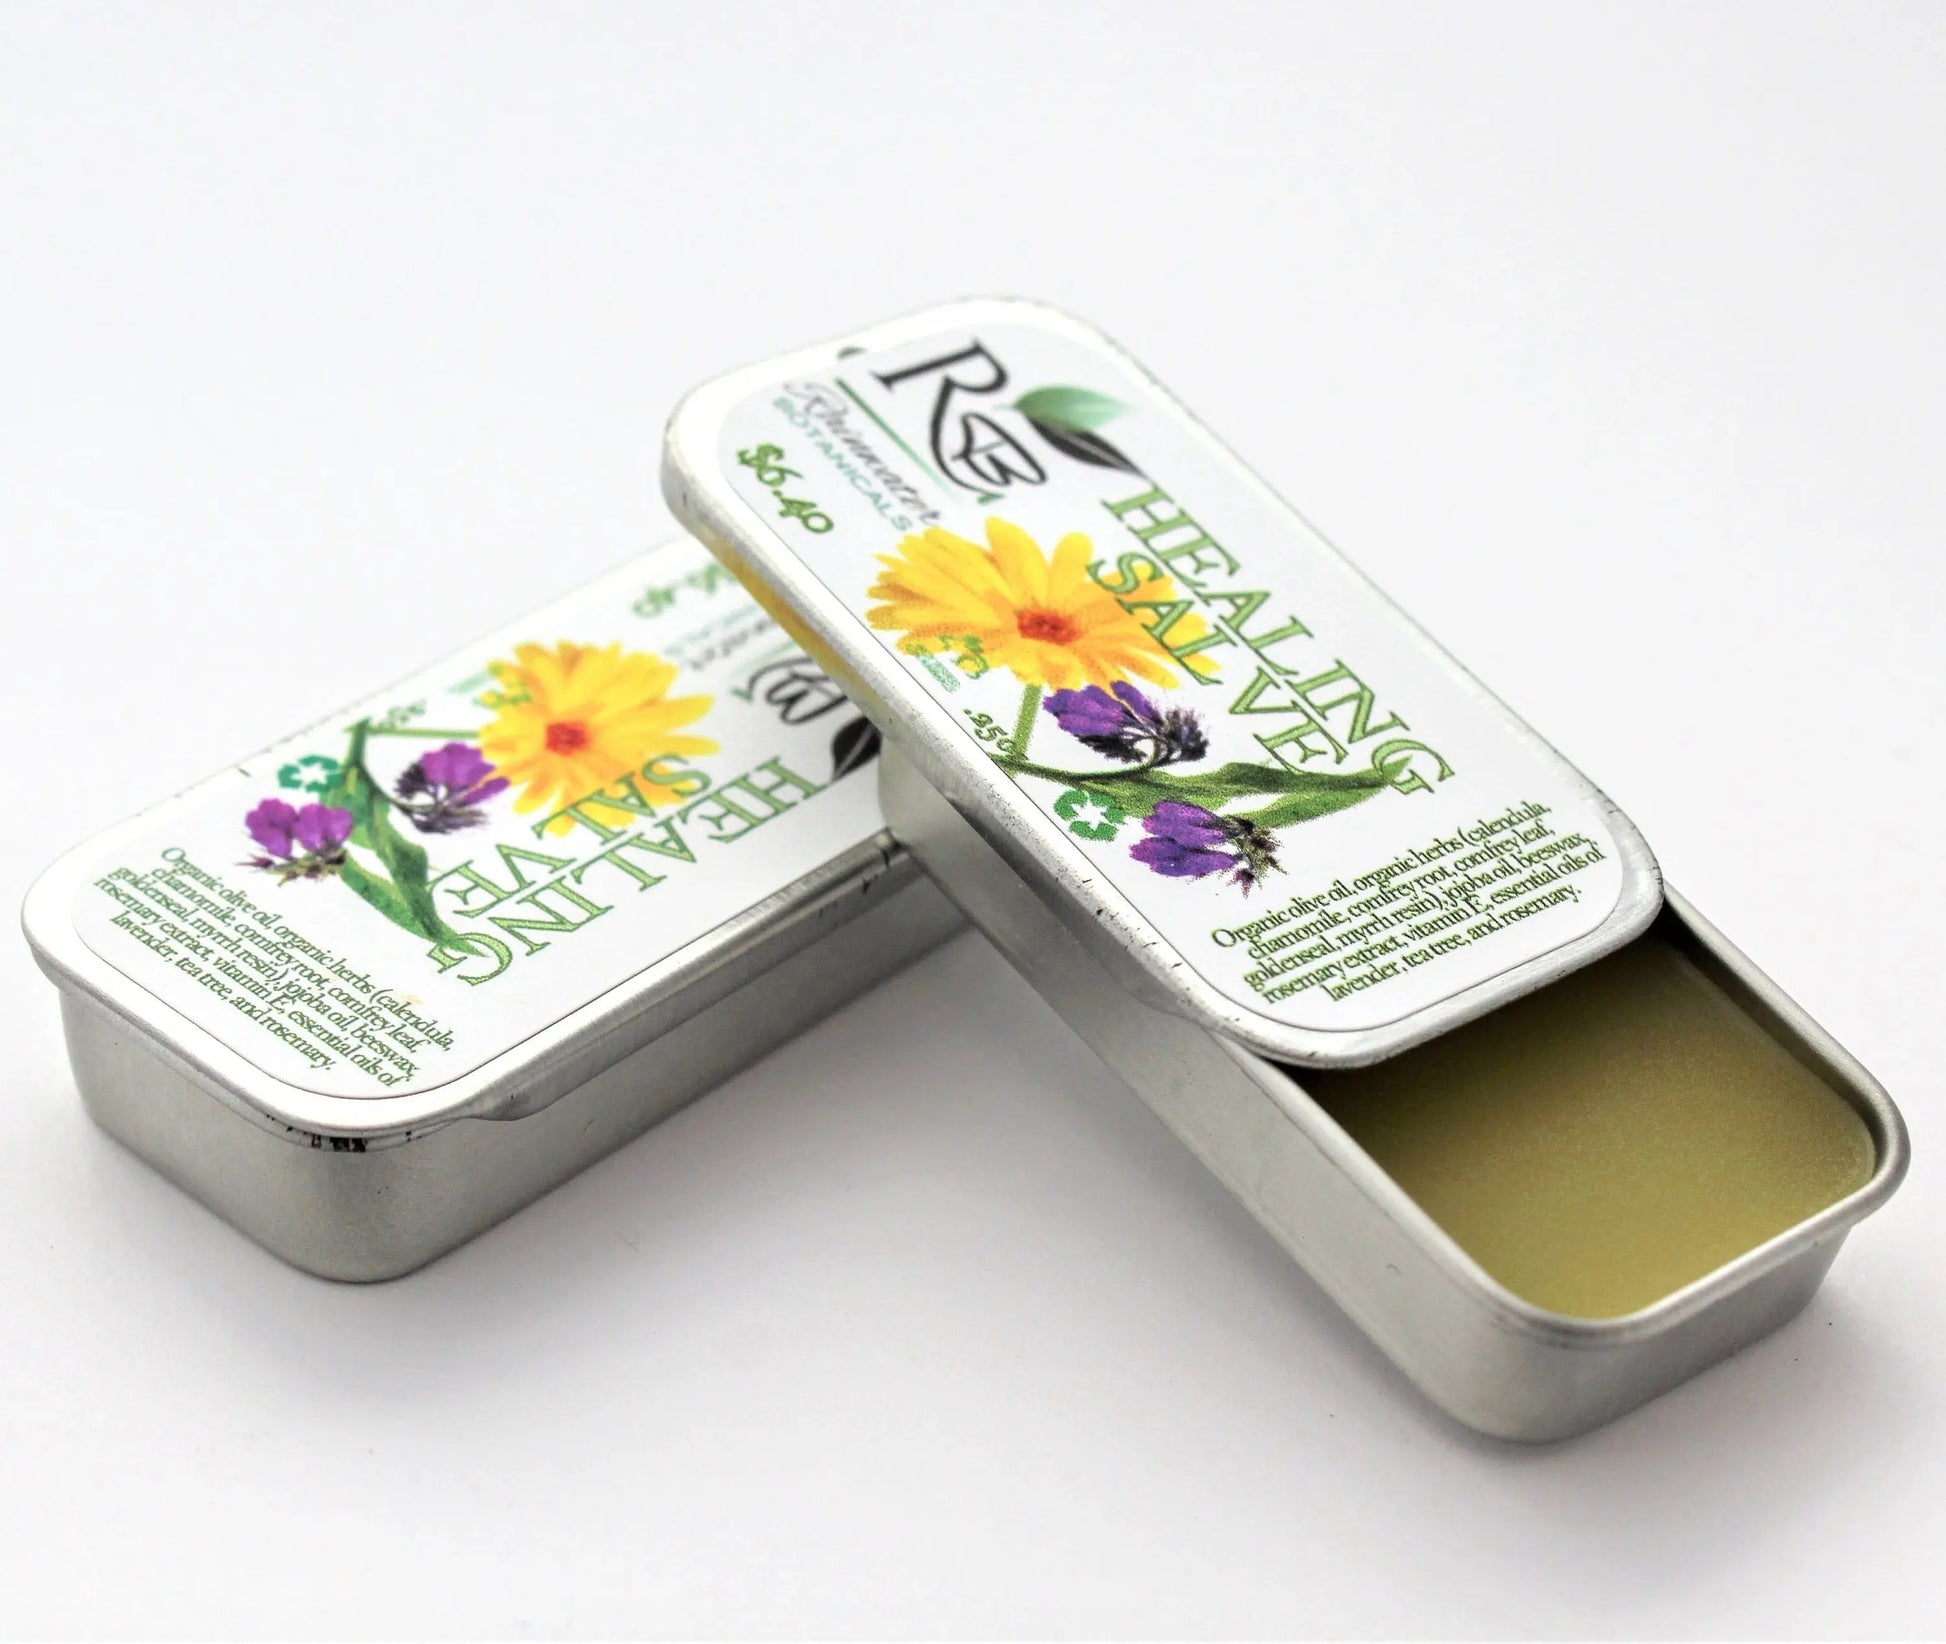 Herbal Healing Salve for Natural Healing .25oz slide tin